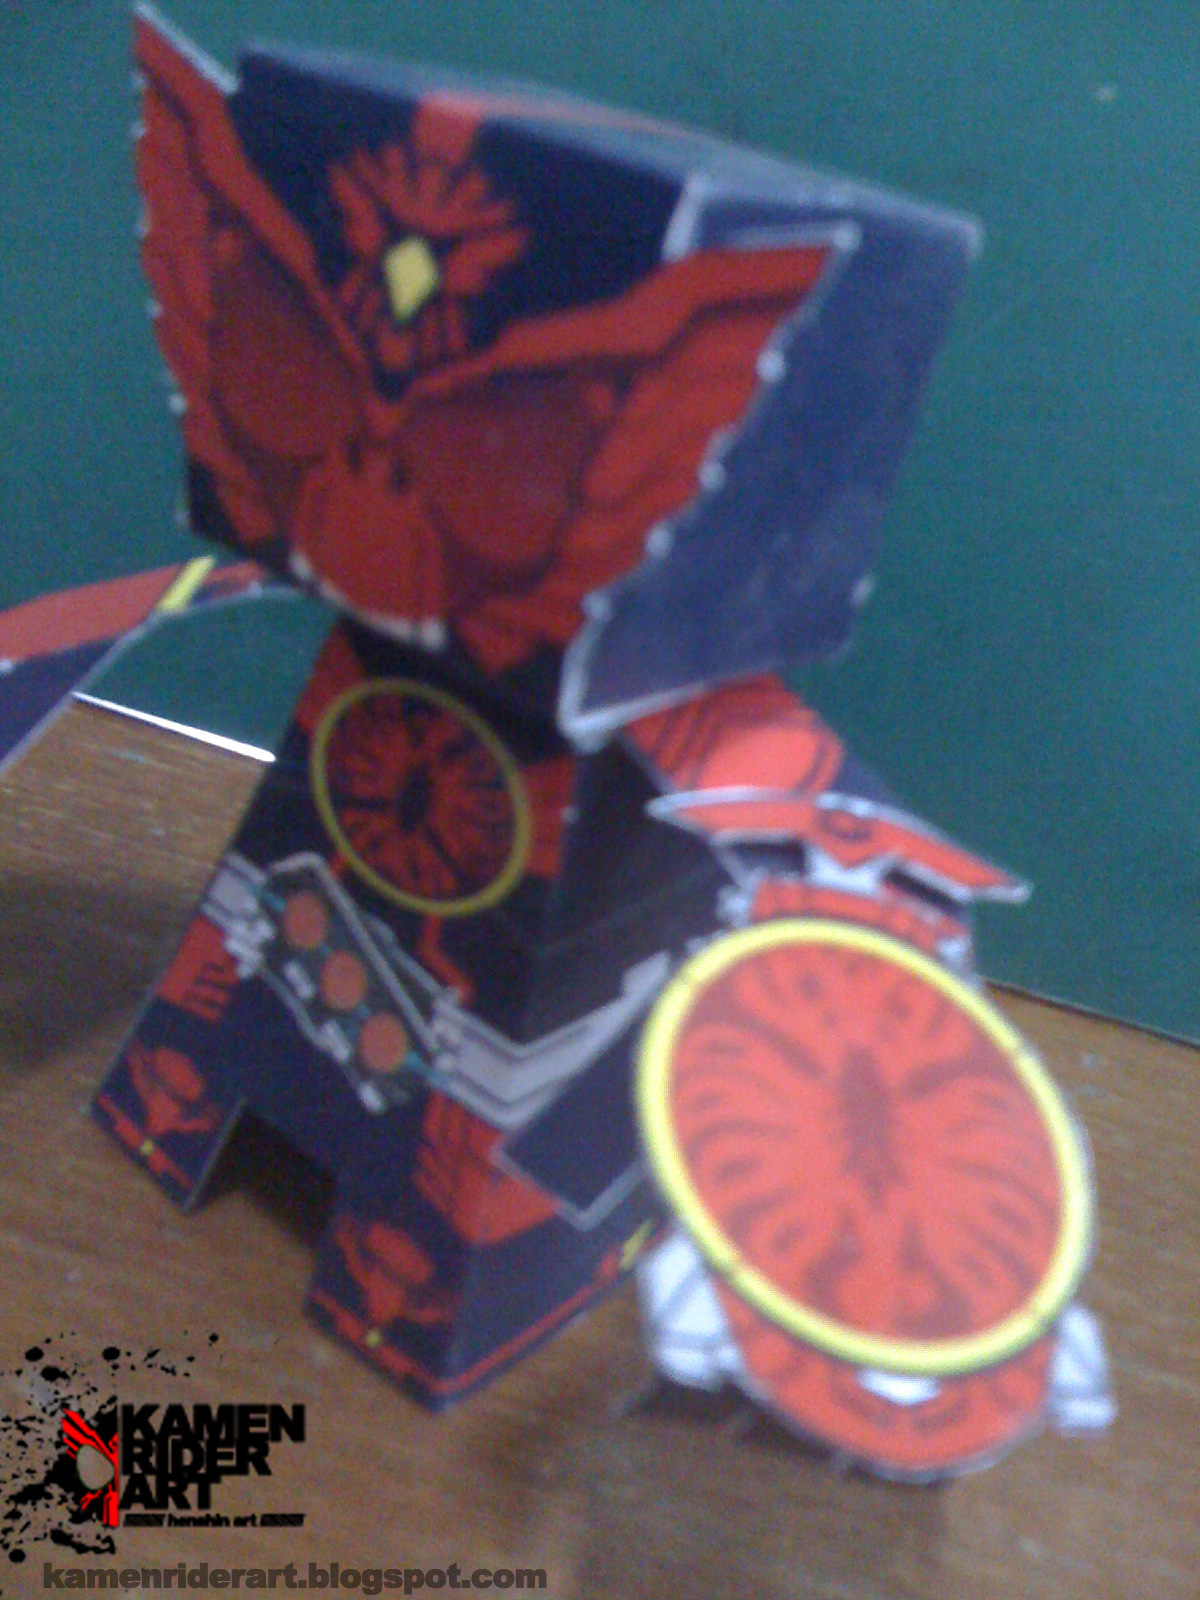 kamen rider art: Kamen Rider OOO - Tajadoru Papercraft